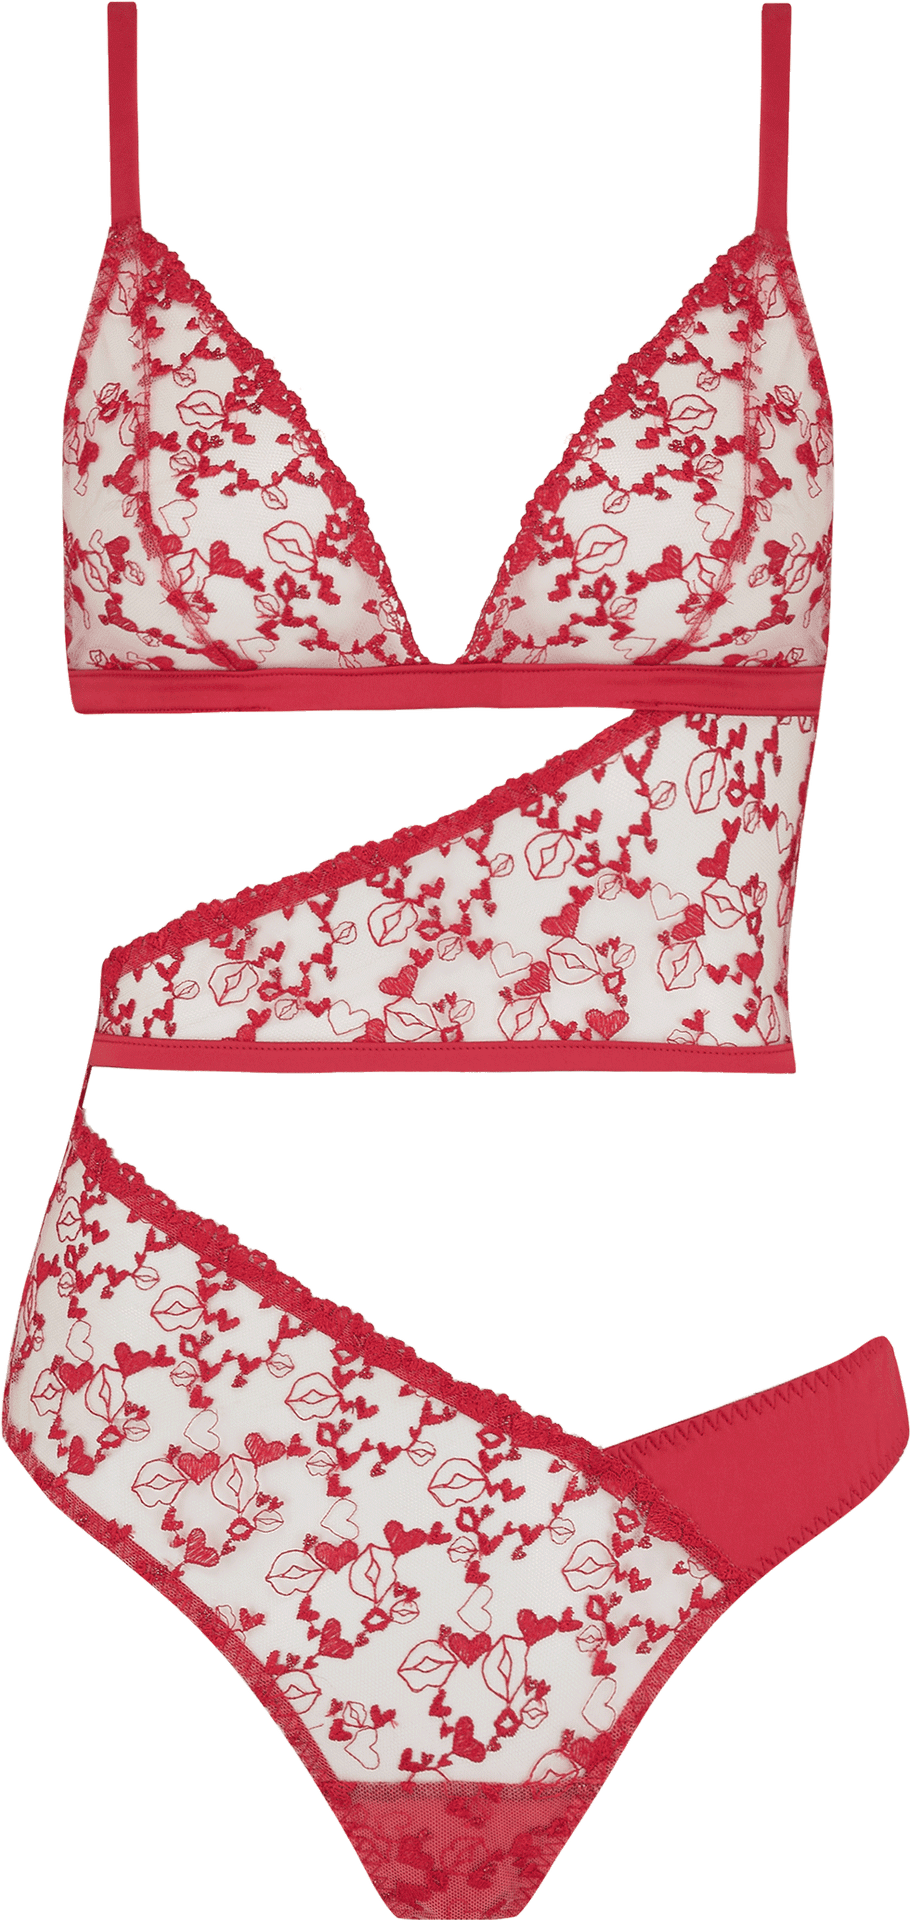 Red Floral Lace Lingerie Set PNG